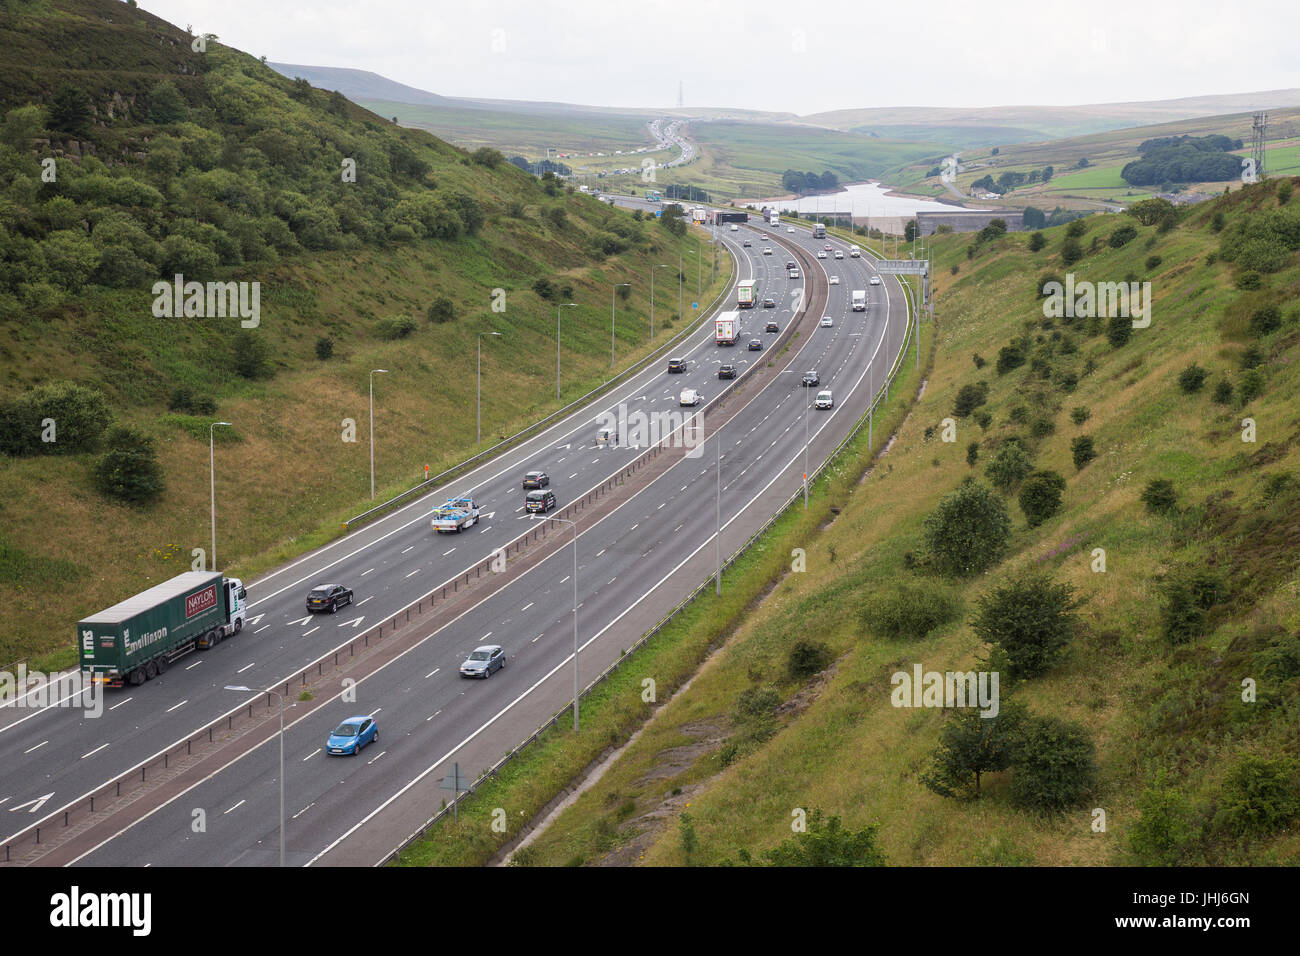 View of the Trans-Pennine M62 motorway in Yorkshire looking West from Scammonden Bridge Stock Photo